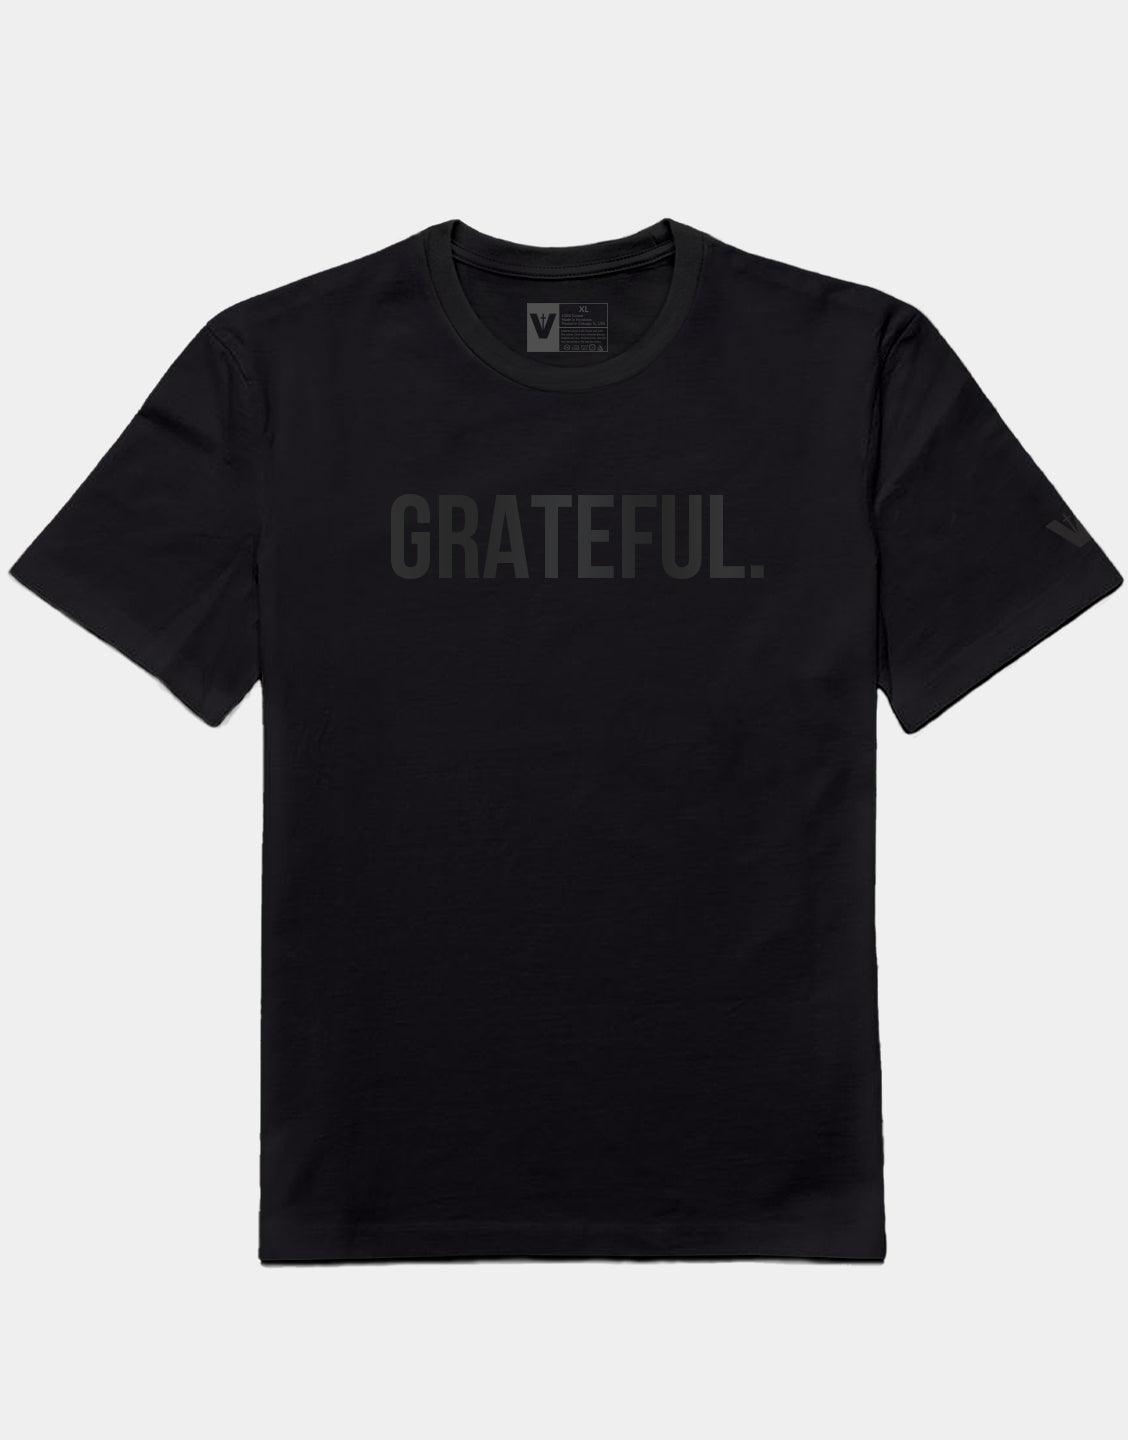 Grateful Blackout Tee - VOTC Clothing